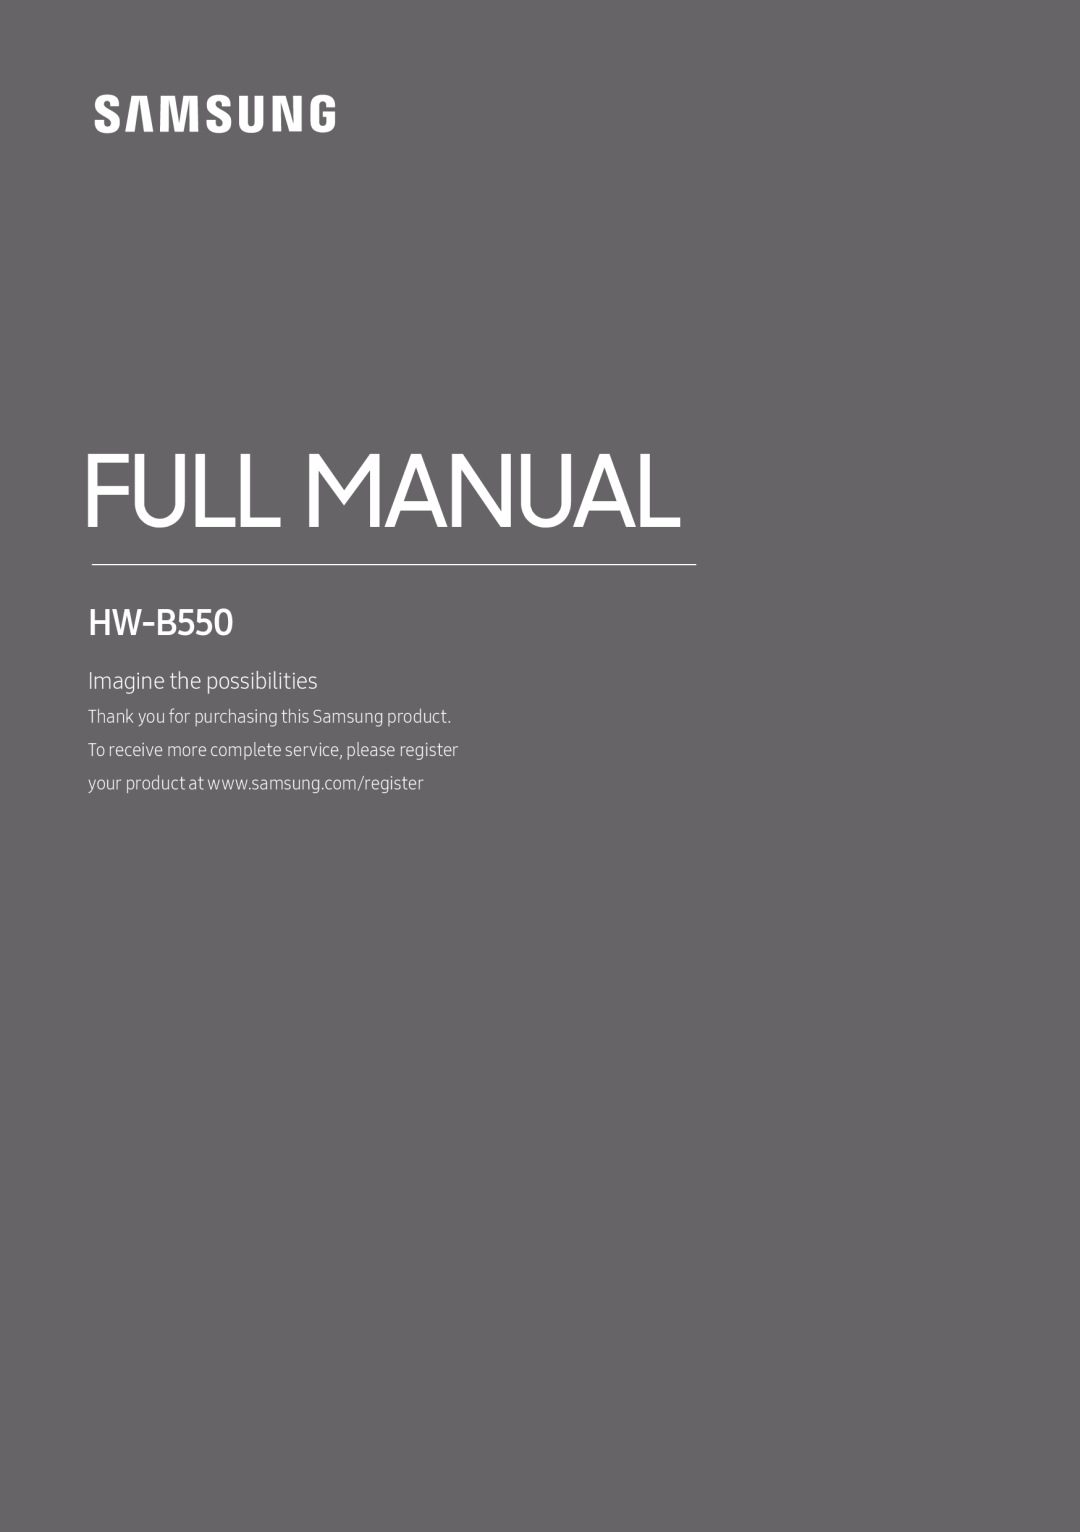 Standard HW-B53M HW-B53C HW-B550